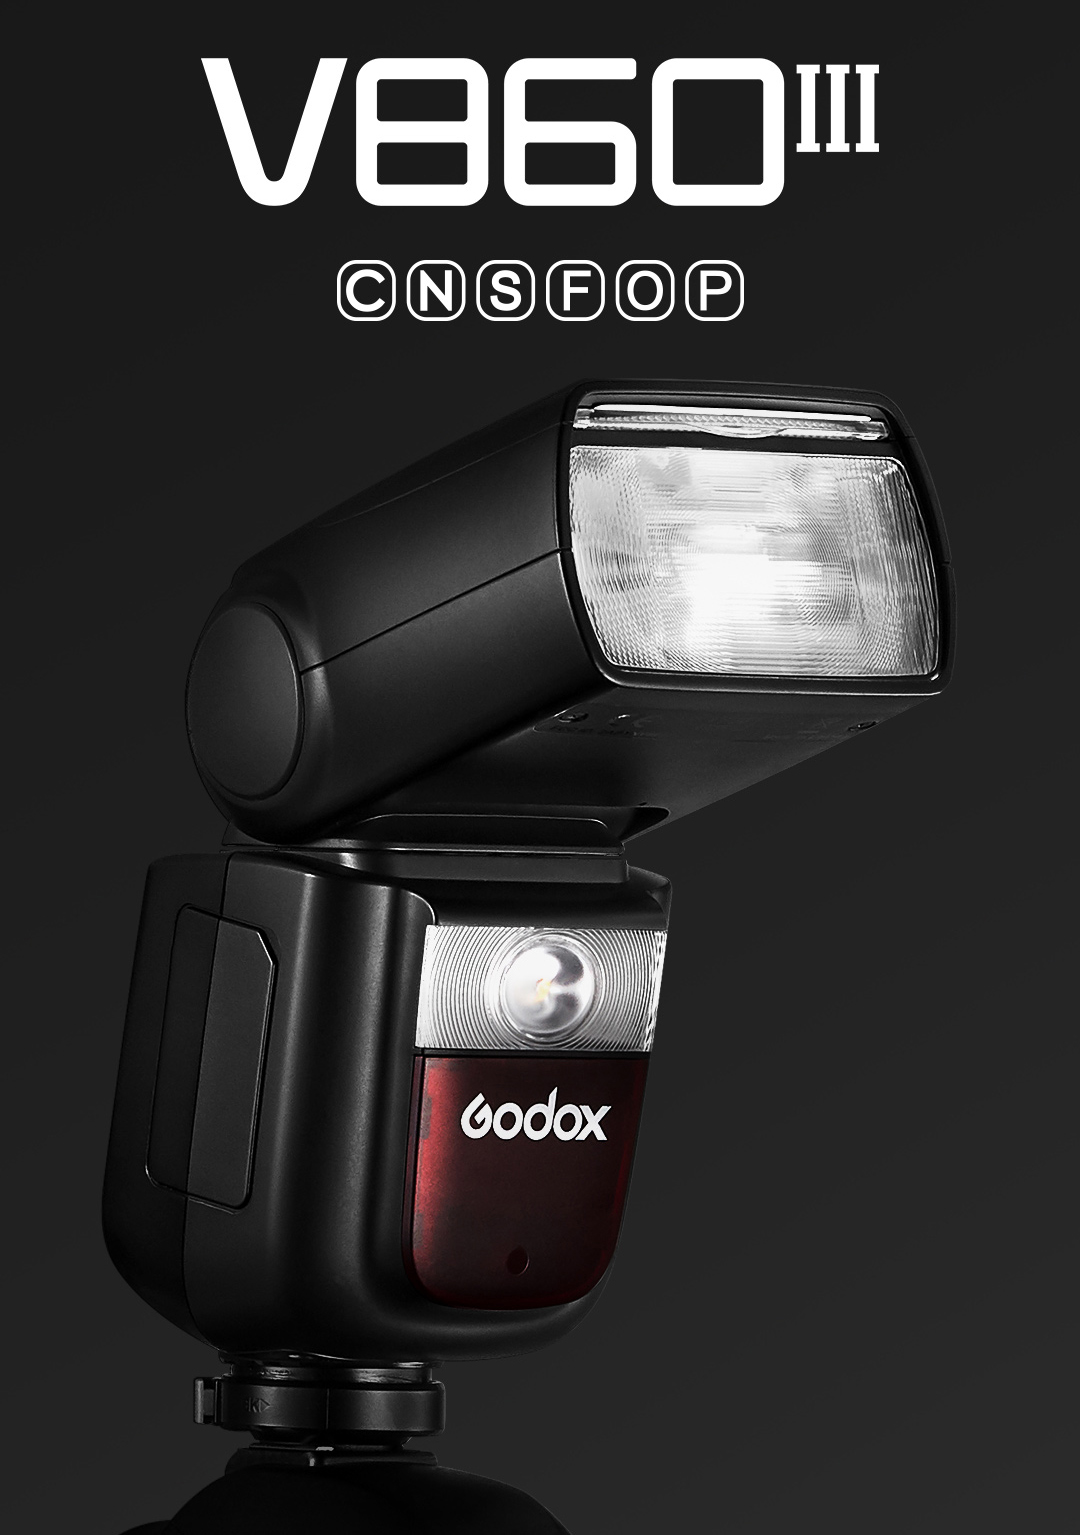 Flash Godox Portable, Flash Photo Studio, Godox Mini Flash